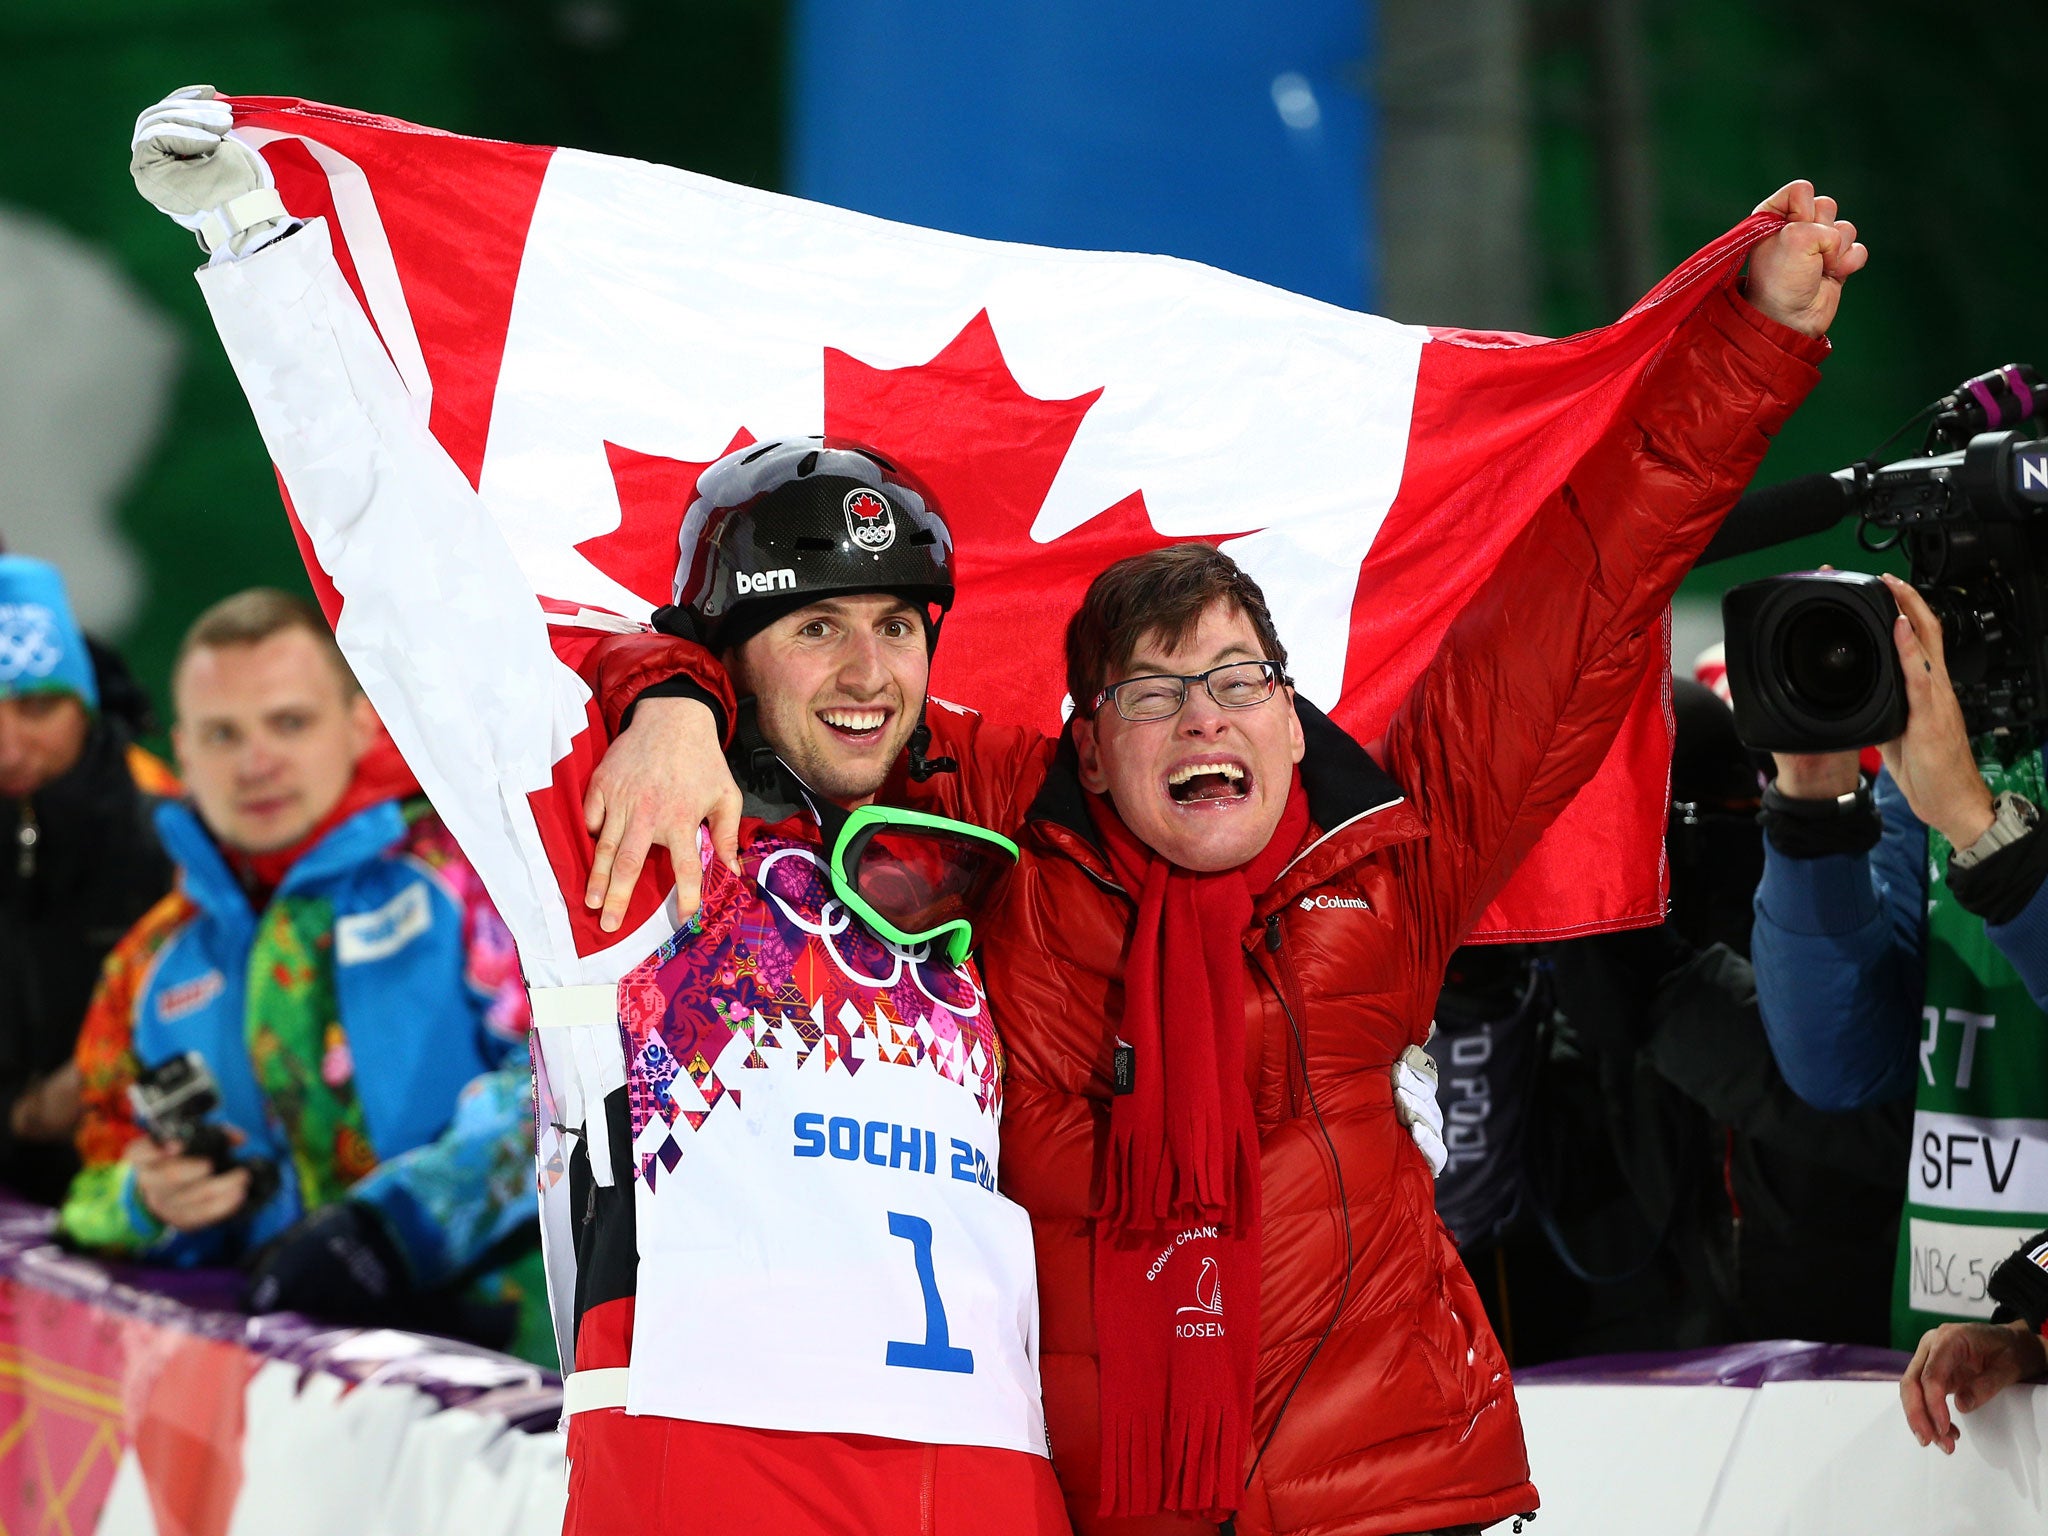 Winter Olympics 2014: Canadian skier Alex Bilodeau captures